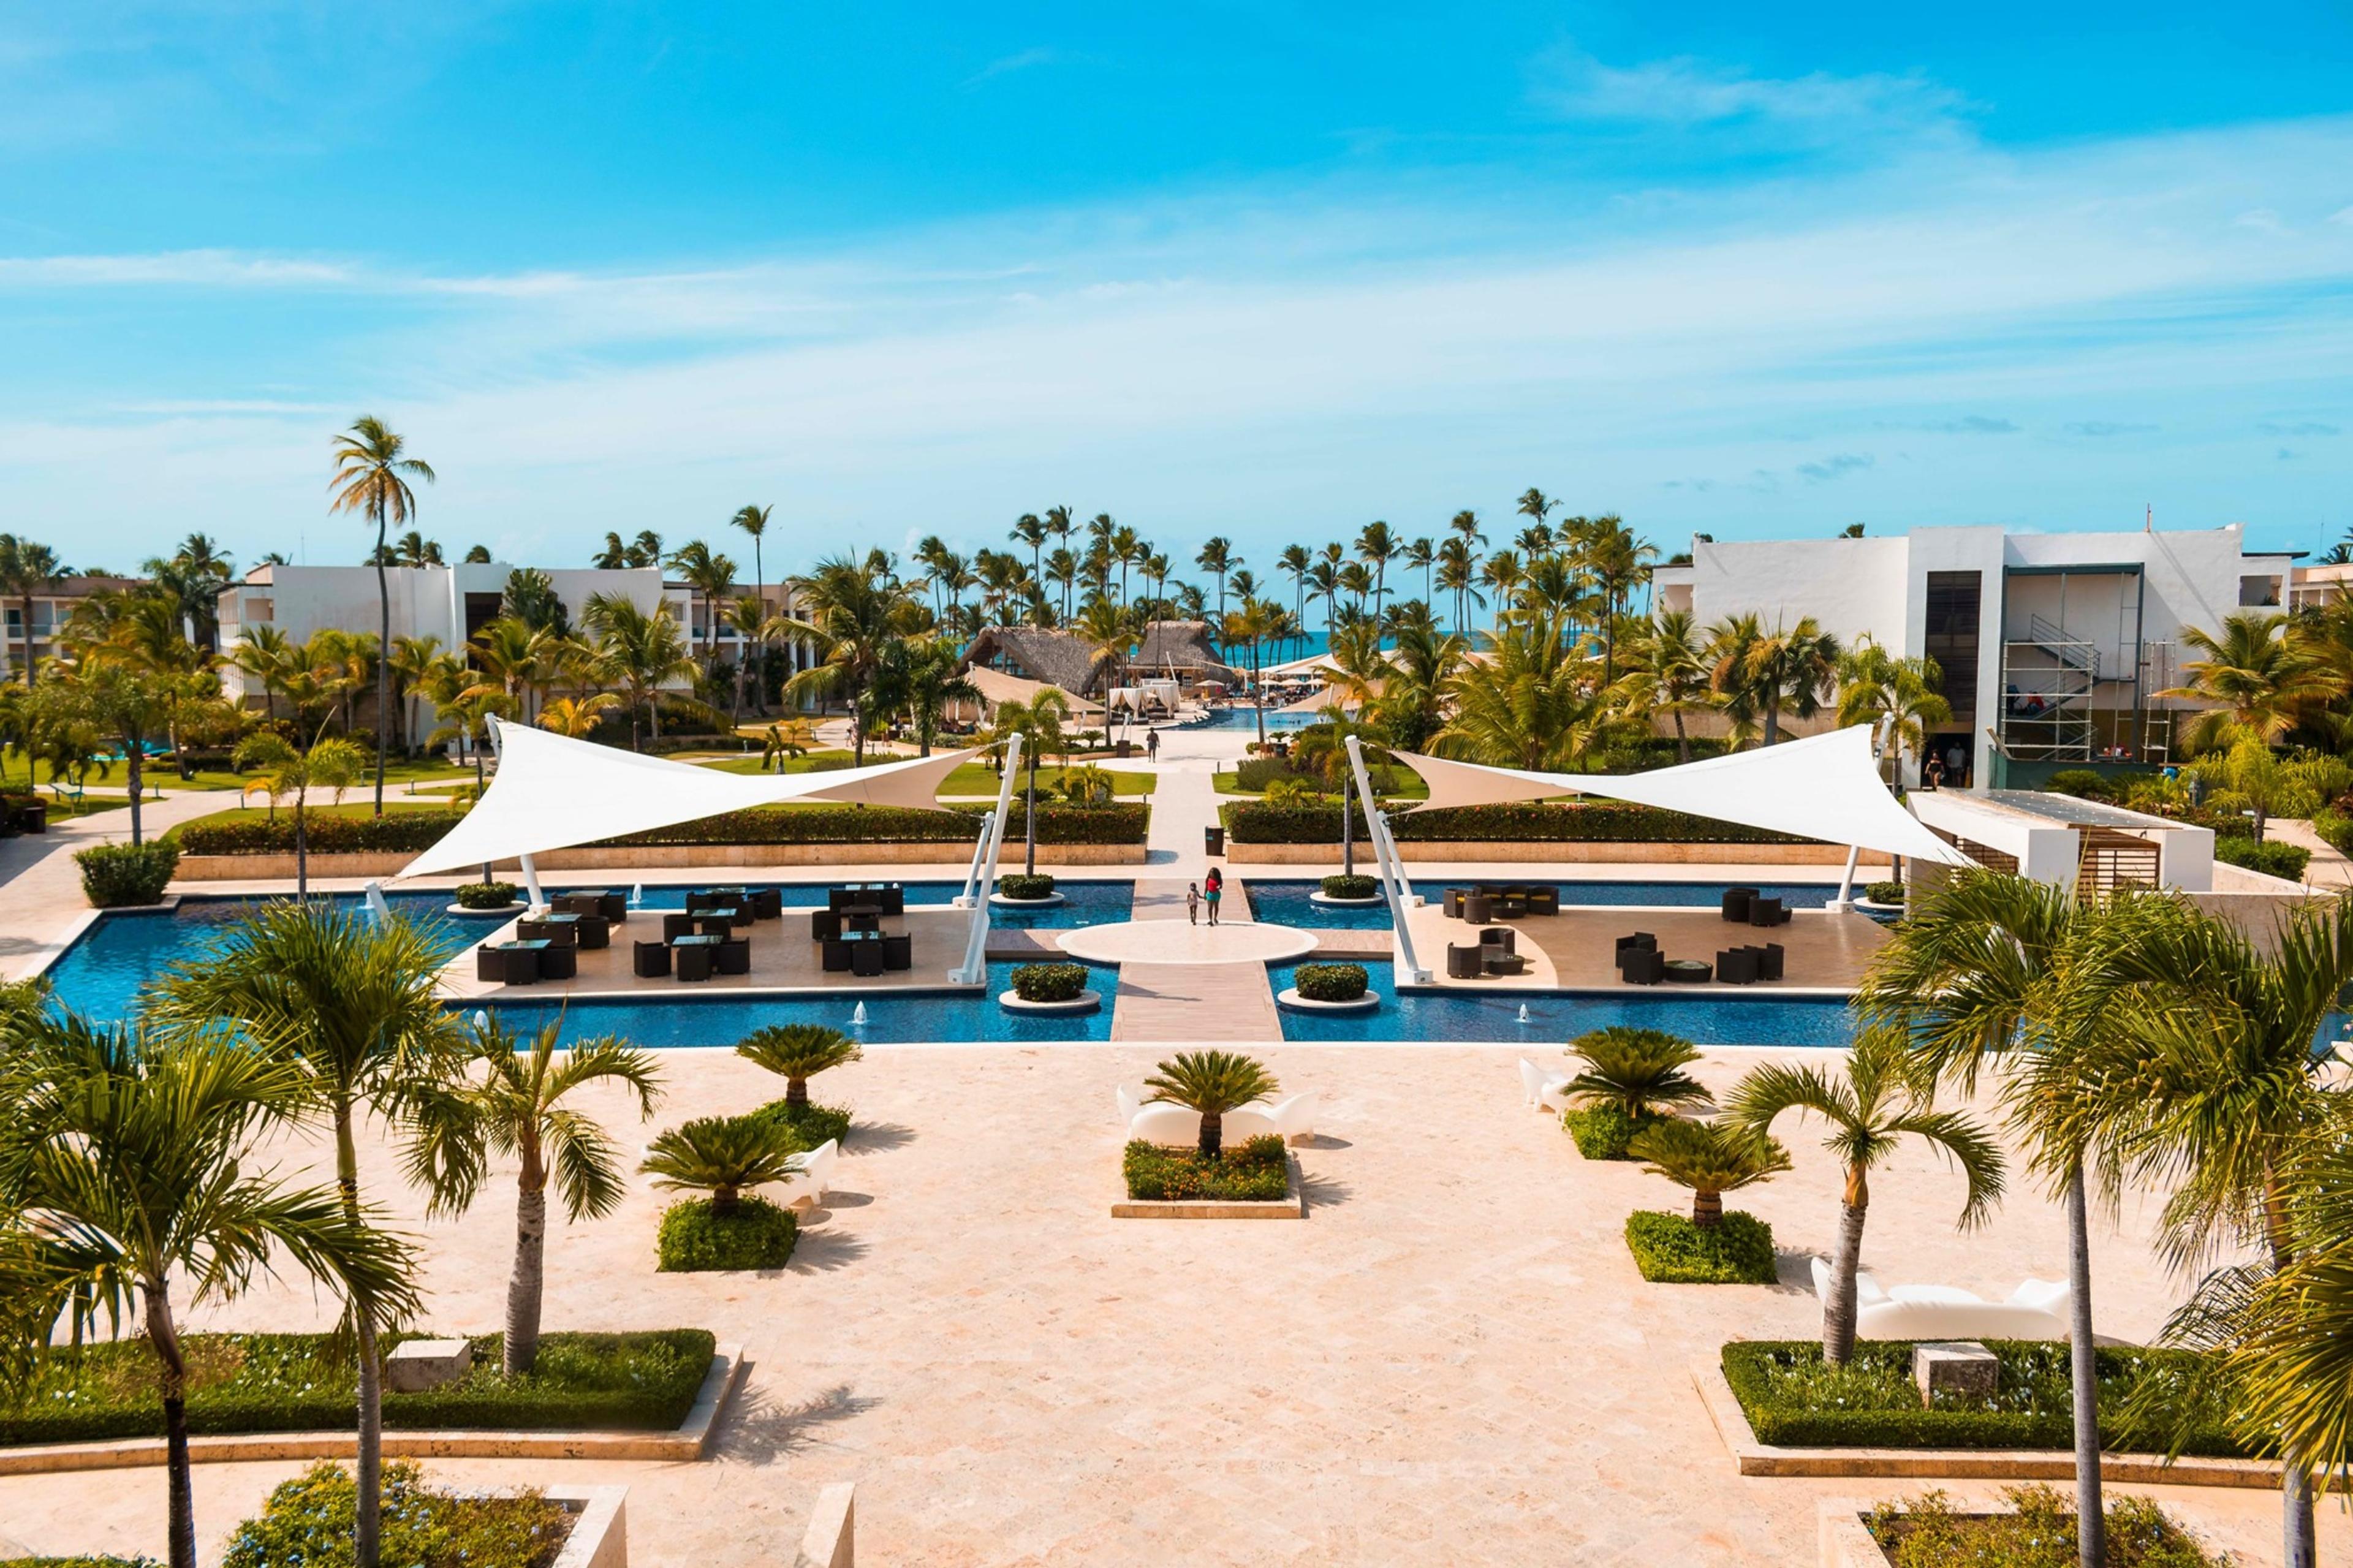 Royalton Punta Cana, An Autograph Collection All-Inclusive Resort & Casino